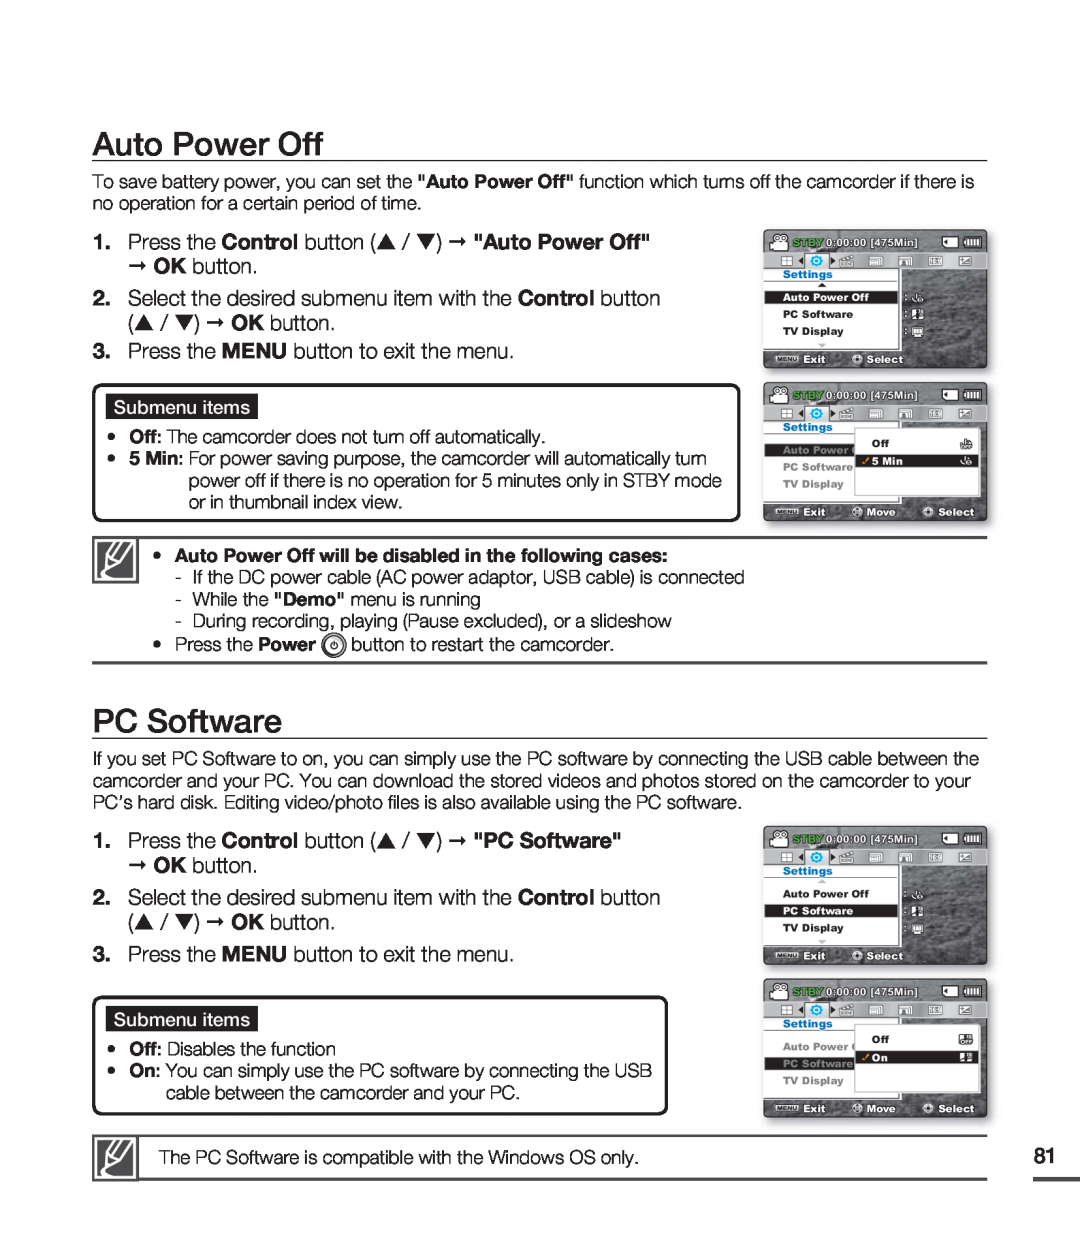 Samsung SMX-C20BP/MEA, SMX-C24BP/EDC PC Software, Press the Control button / Auto Power Off, OK button, Submenu items 